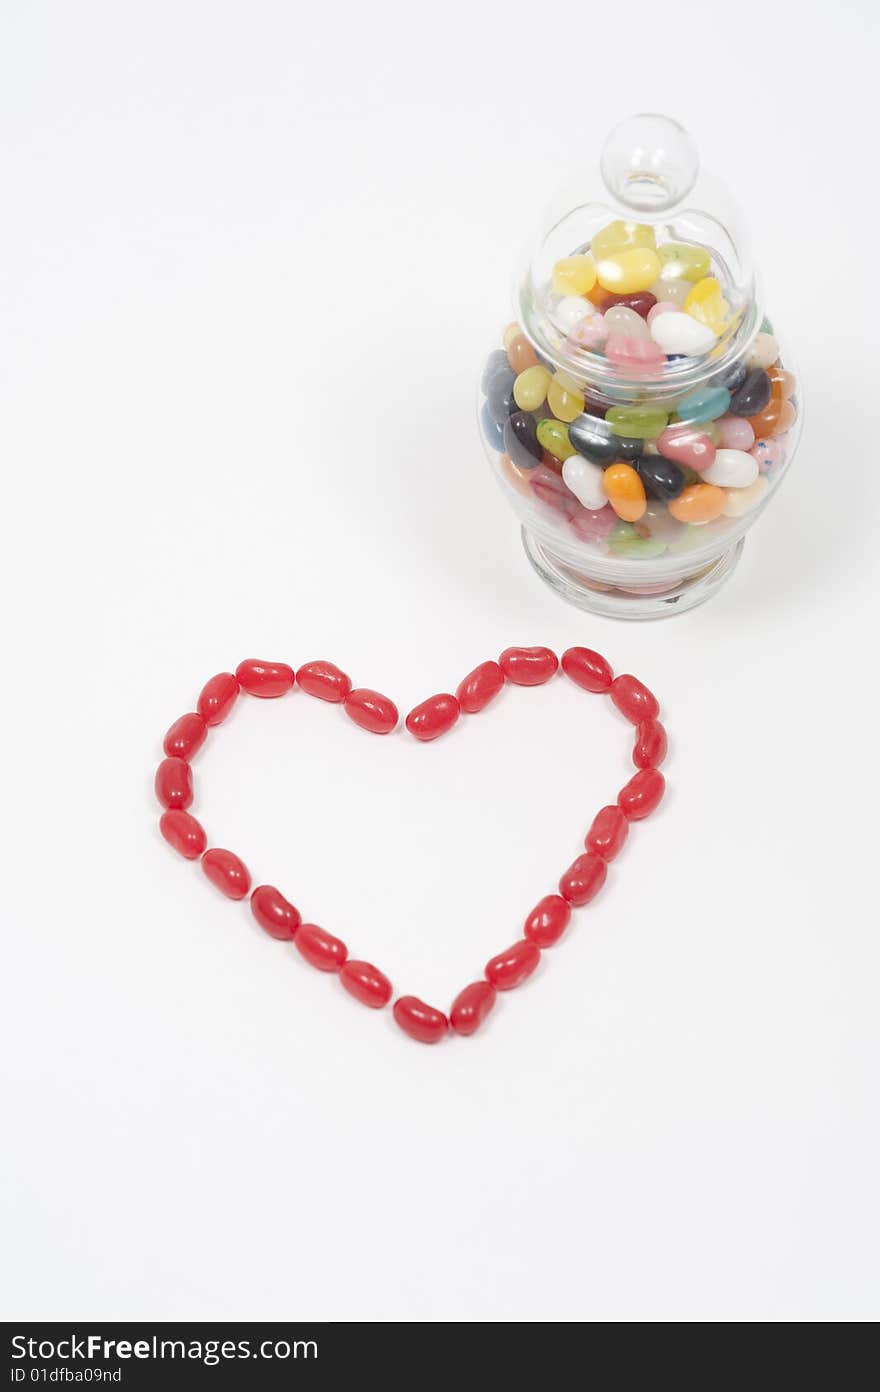 Jellybean heart candy jar